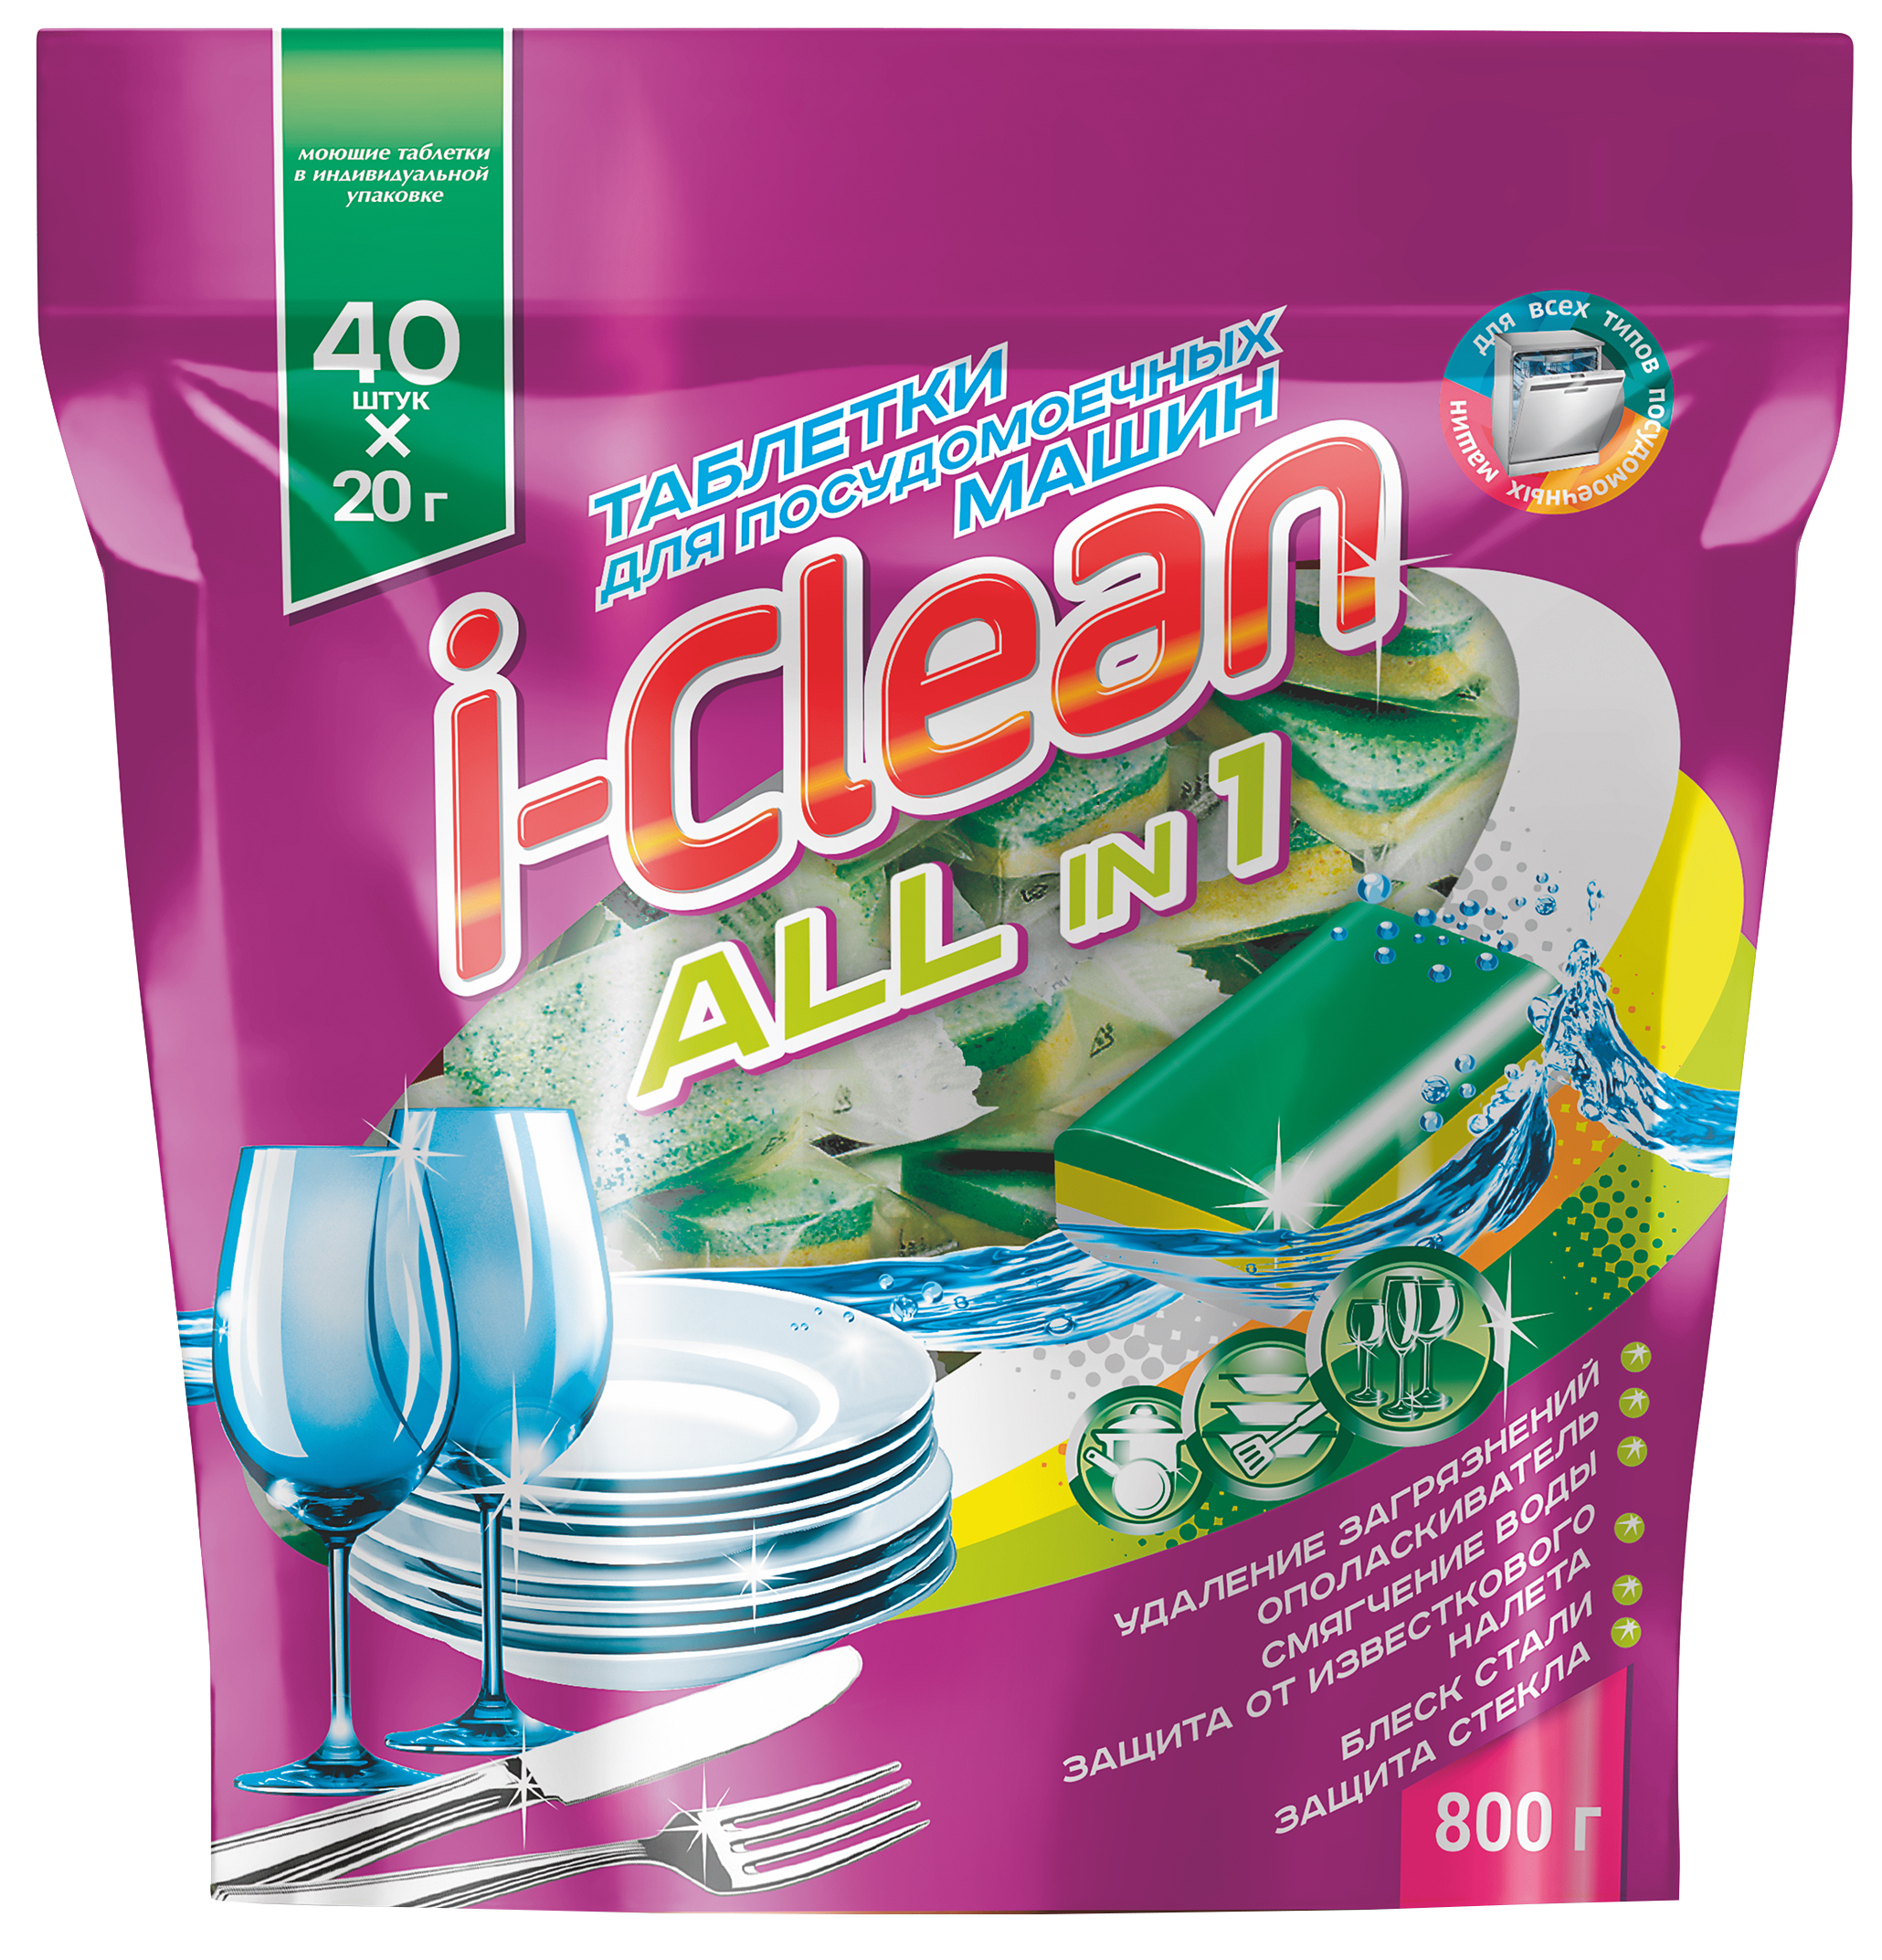 Таблетки Romax i-clean all in 1  для посудомоечных машин 40 шт